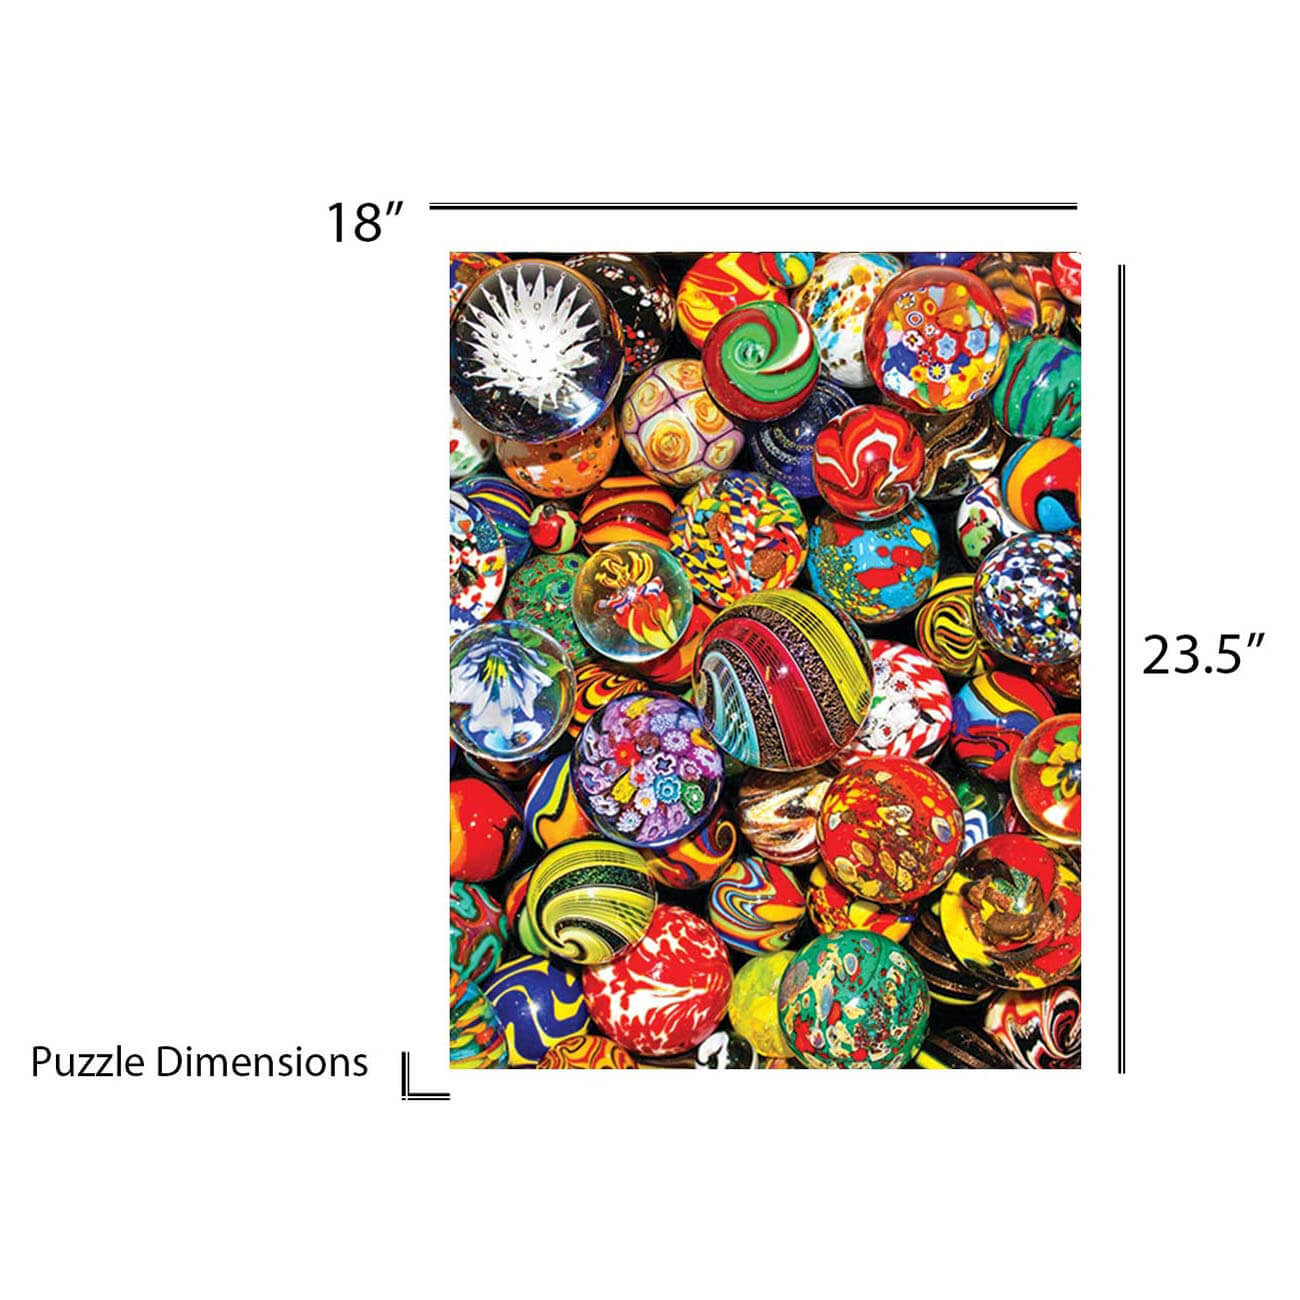 Springbok Marble Madness 500 Piece Jigsaw Puzzle